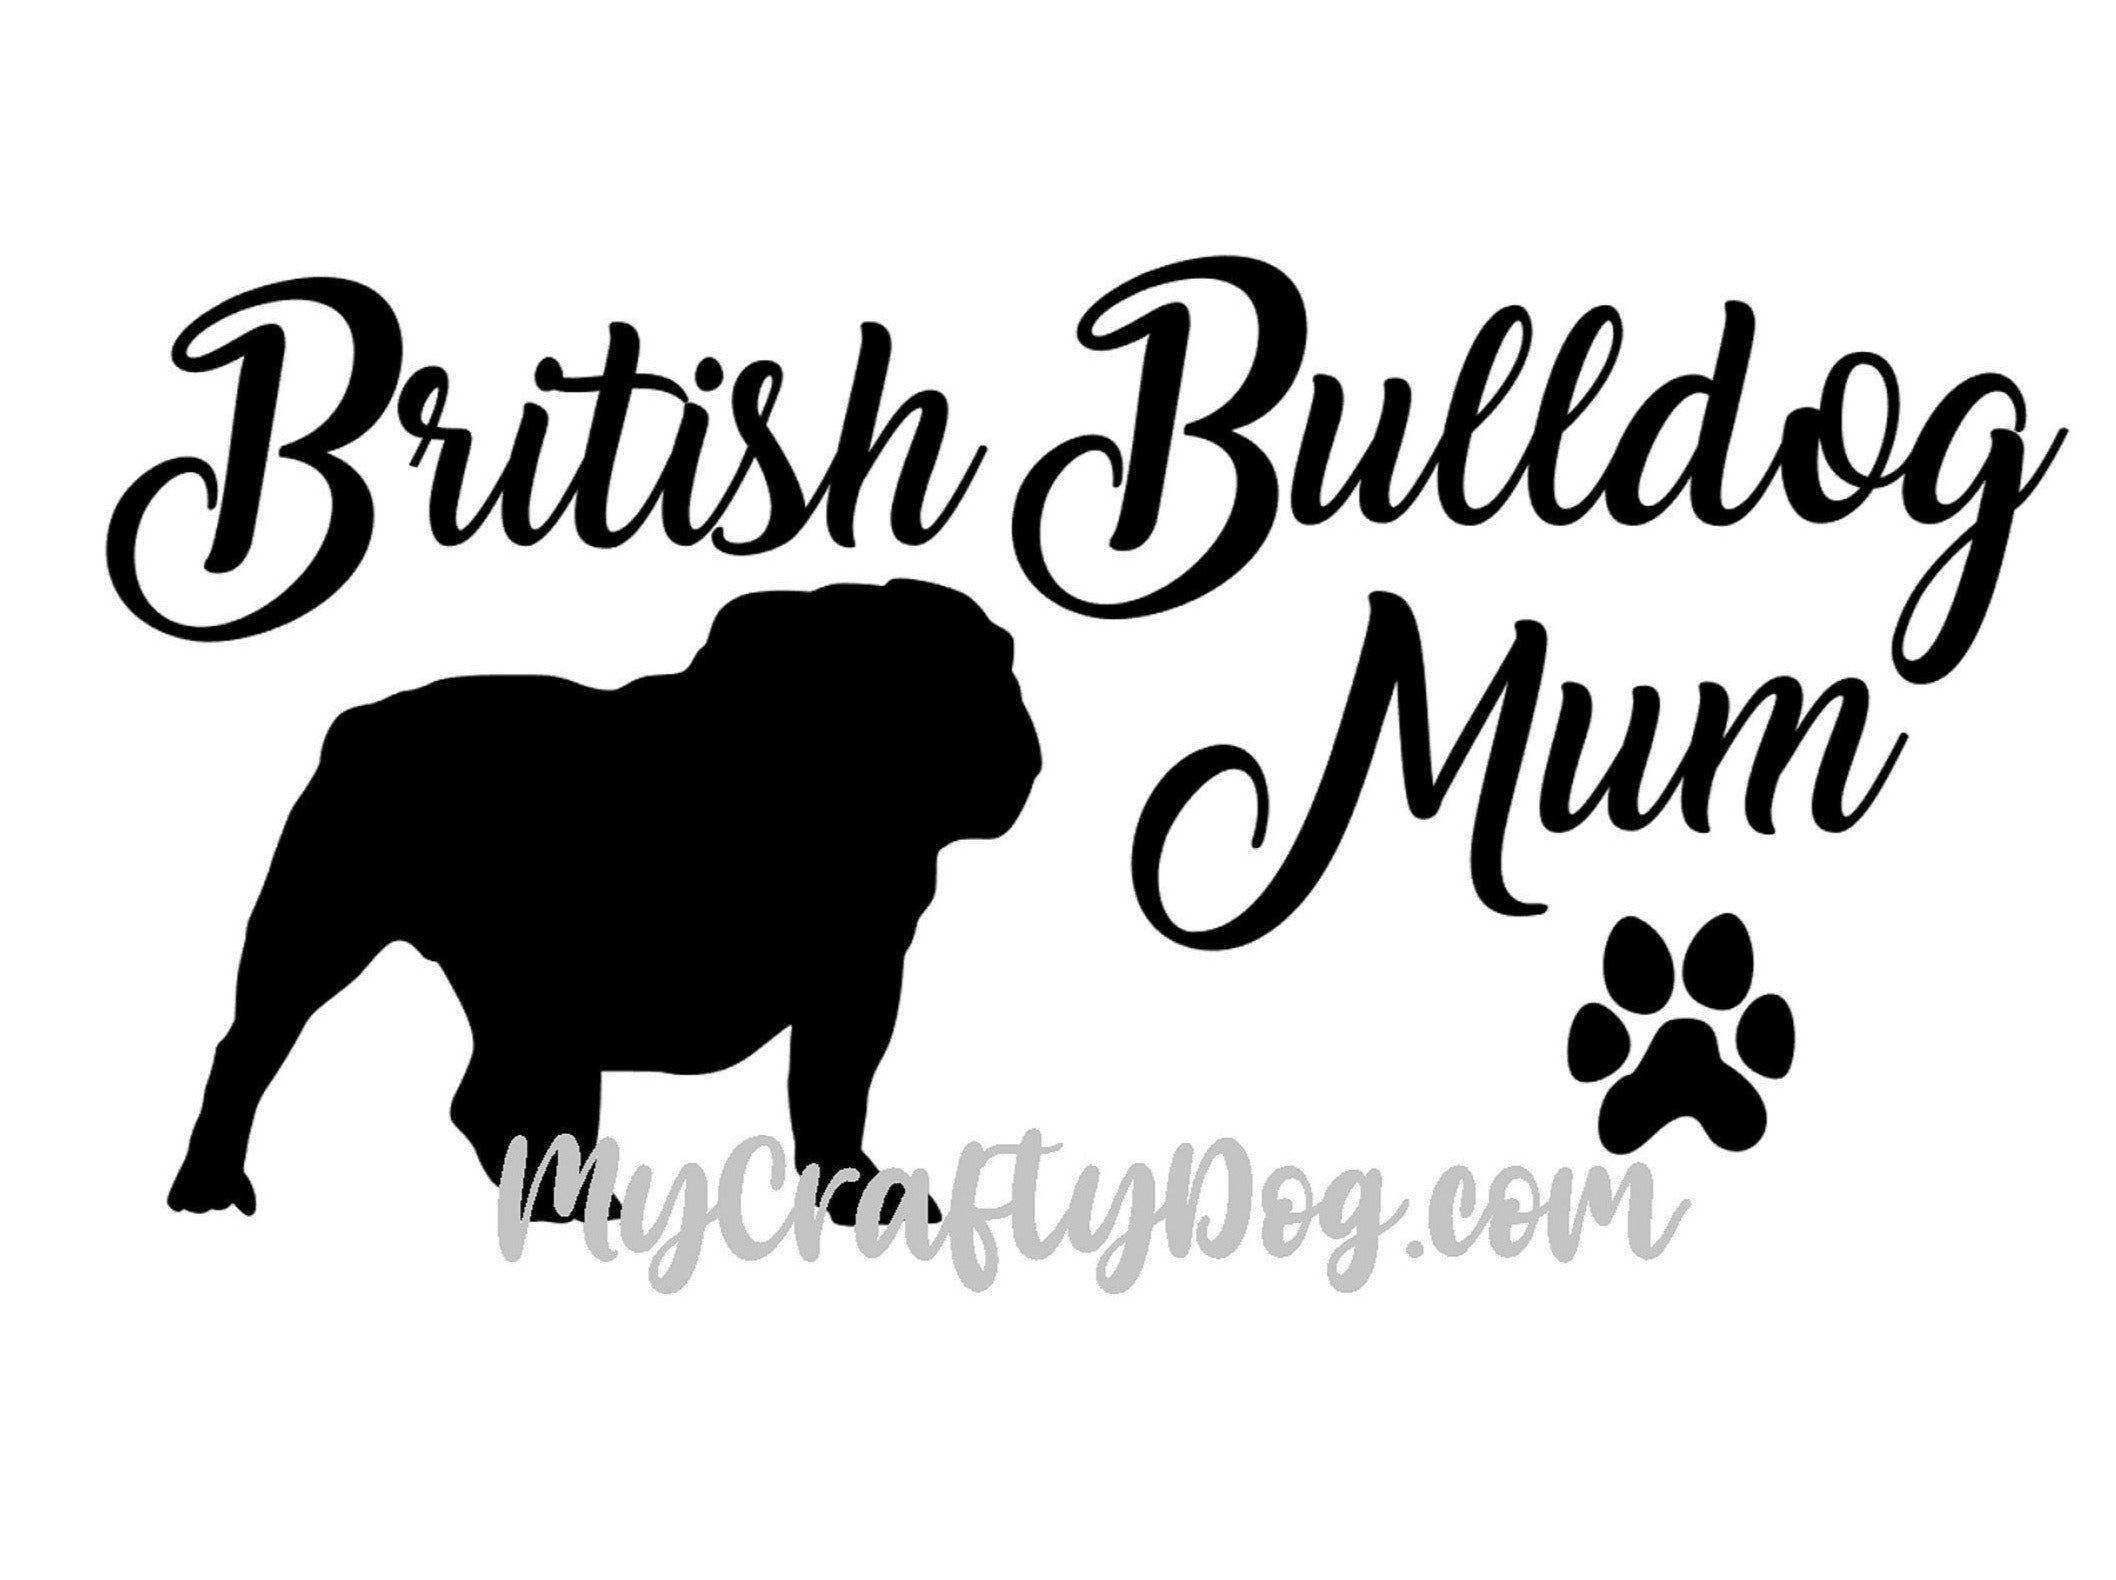 British Bulldog Mum Car decal - My Crafty Dog